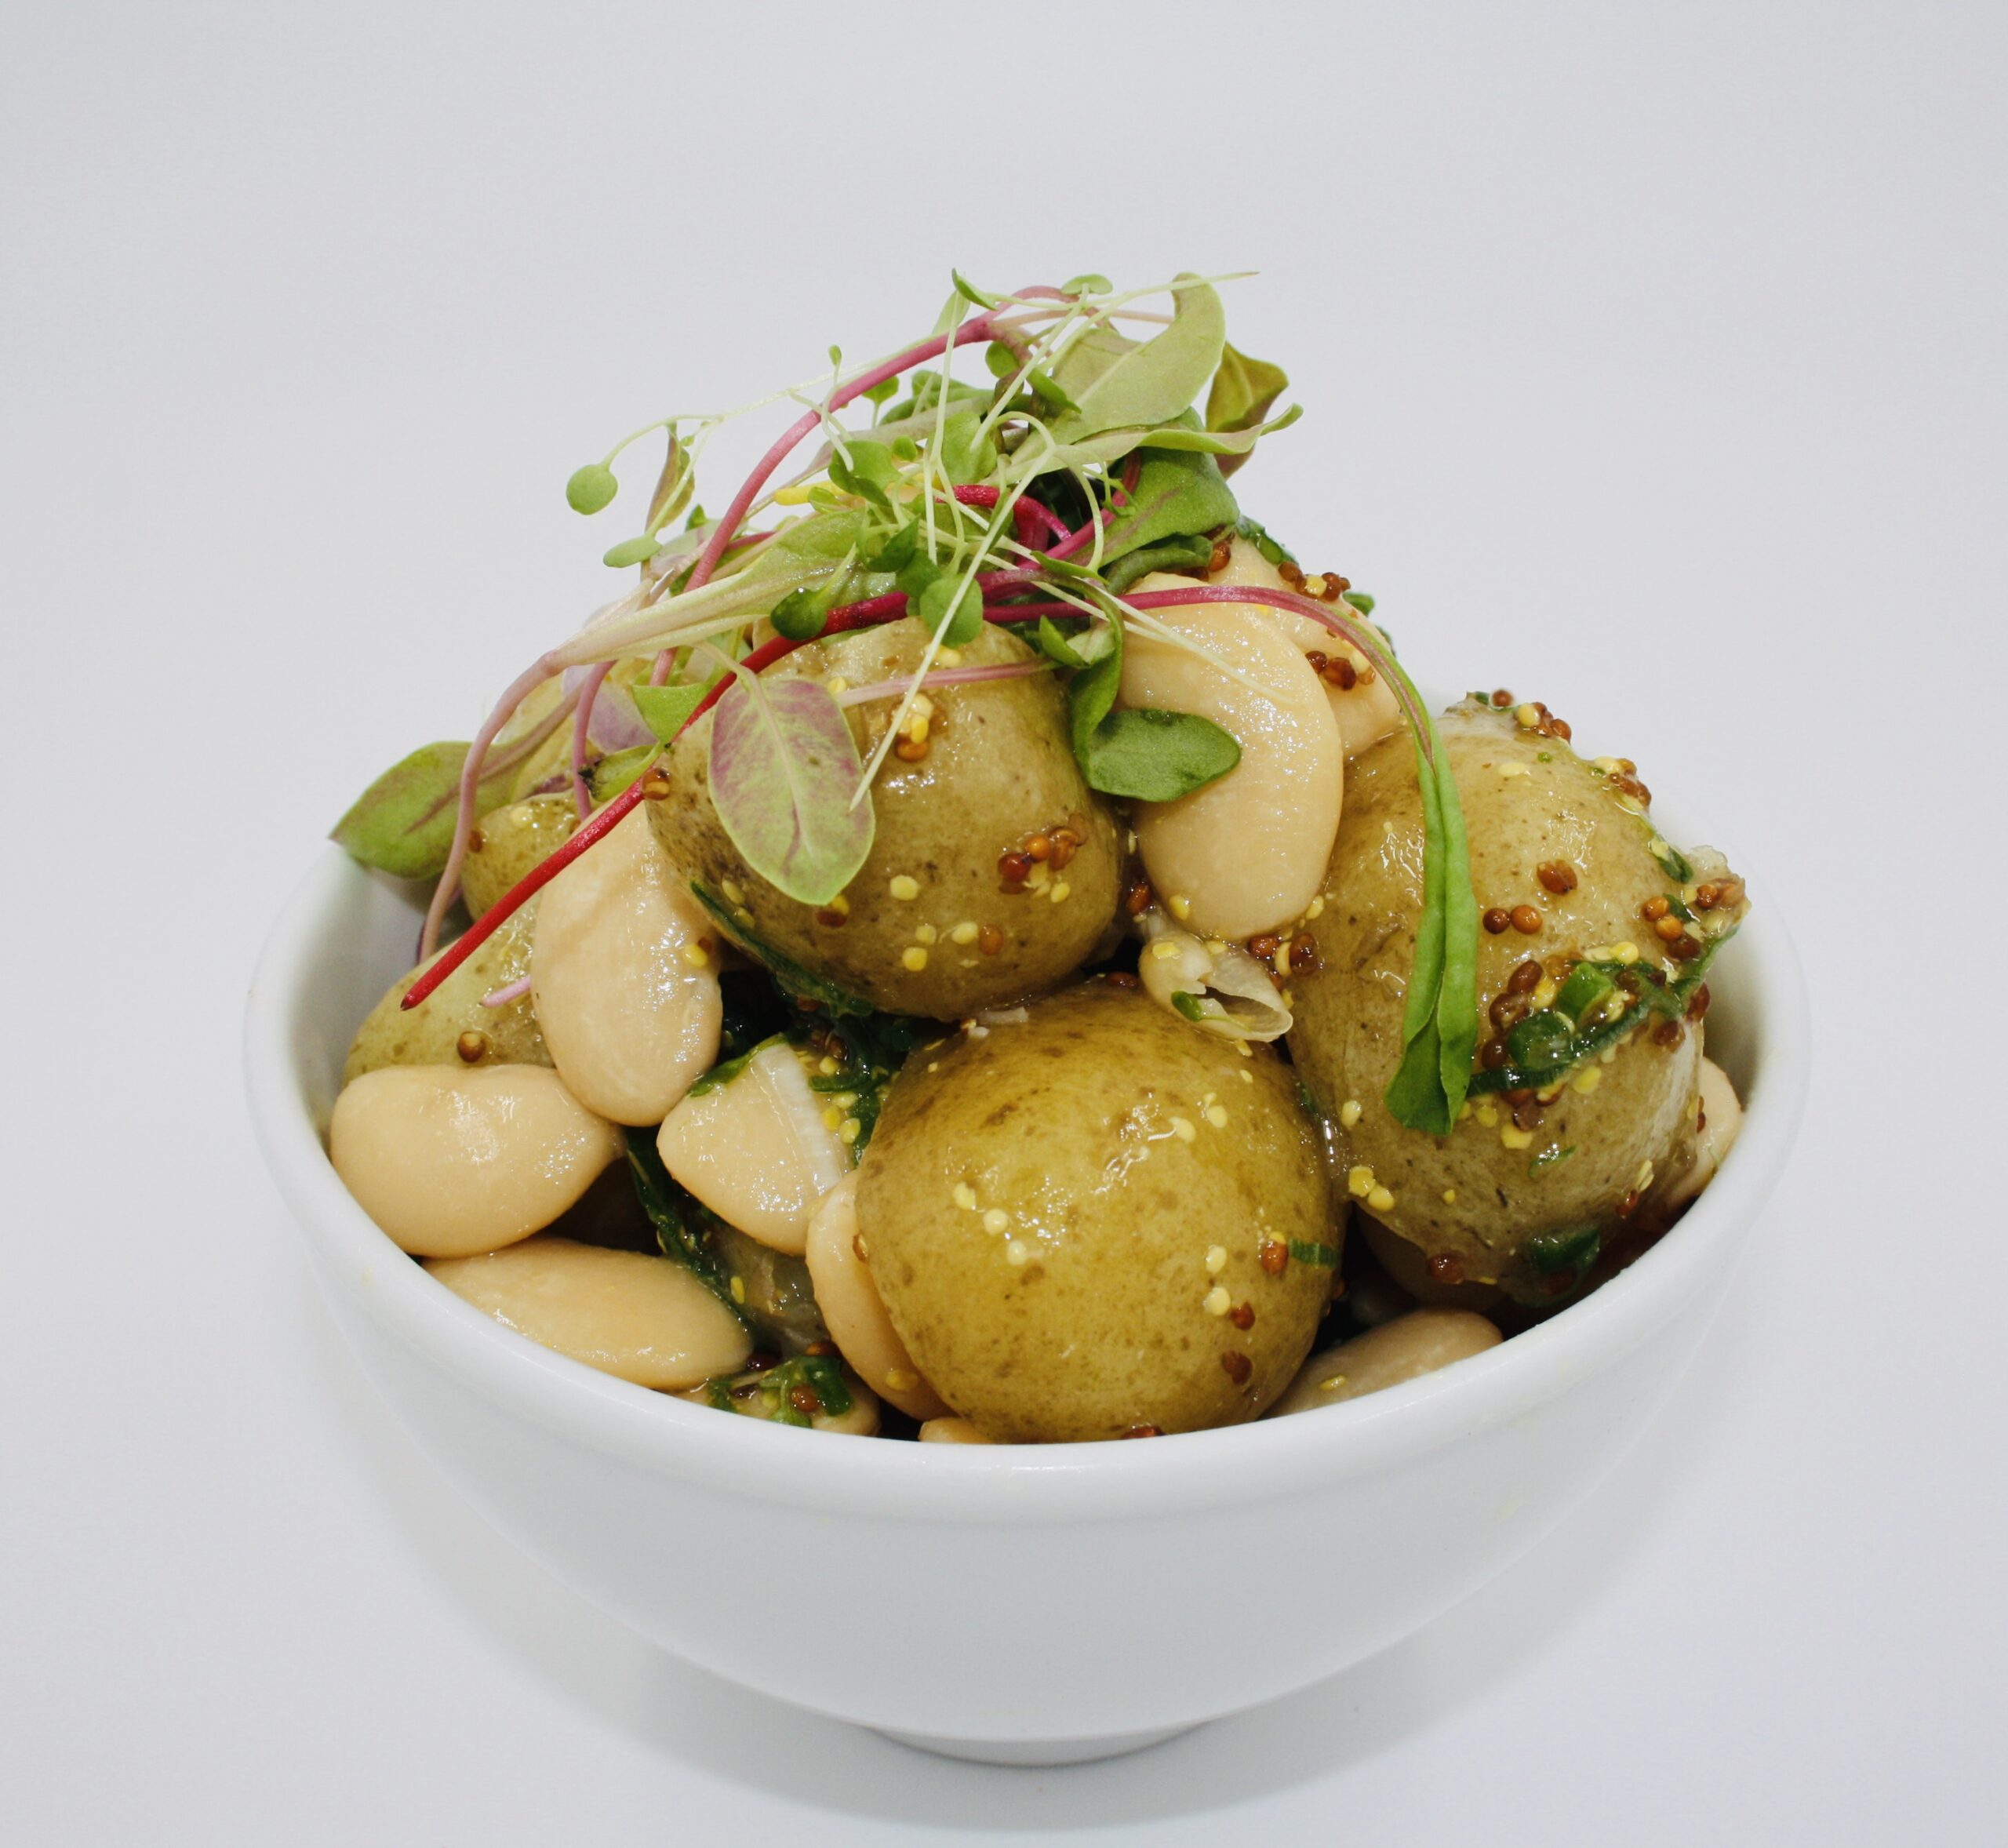 Recipe: New Potato, Butterbean & Meaux Mustard Salad